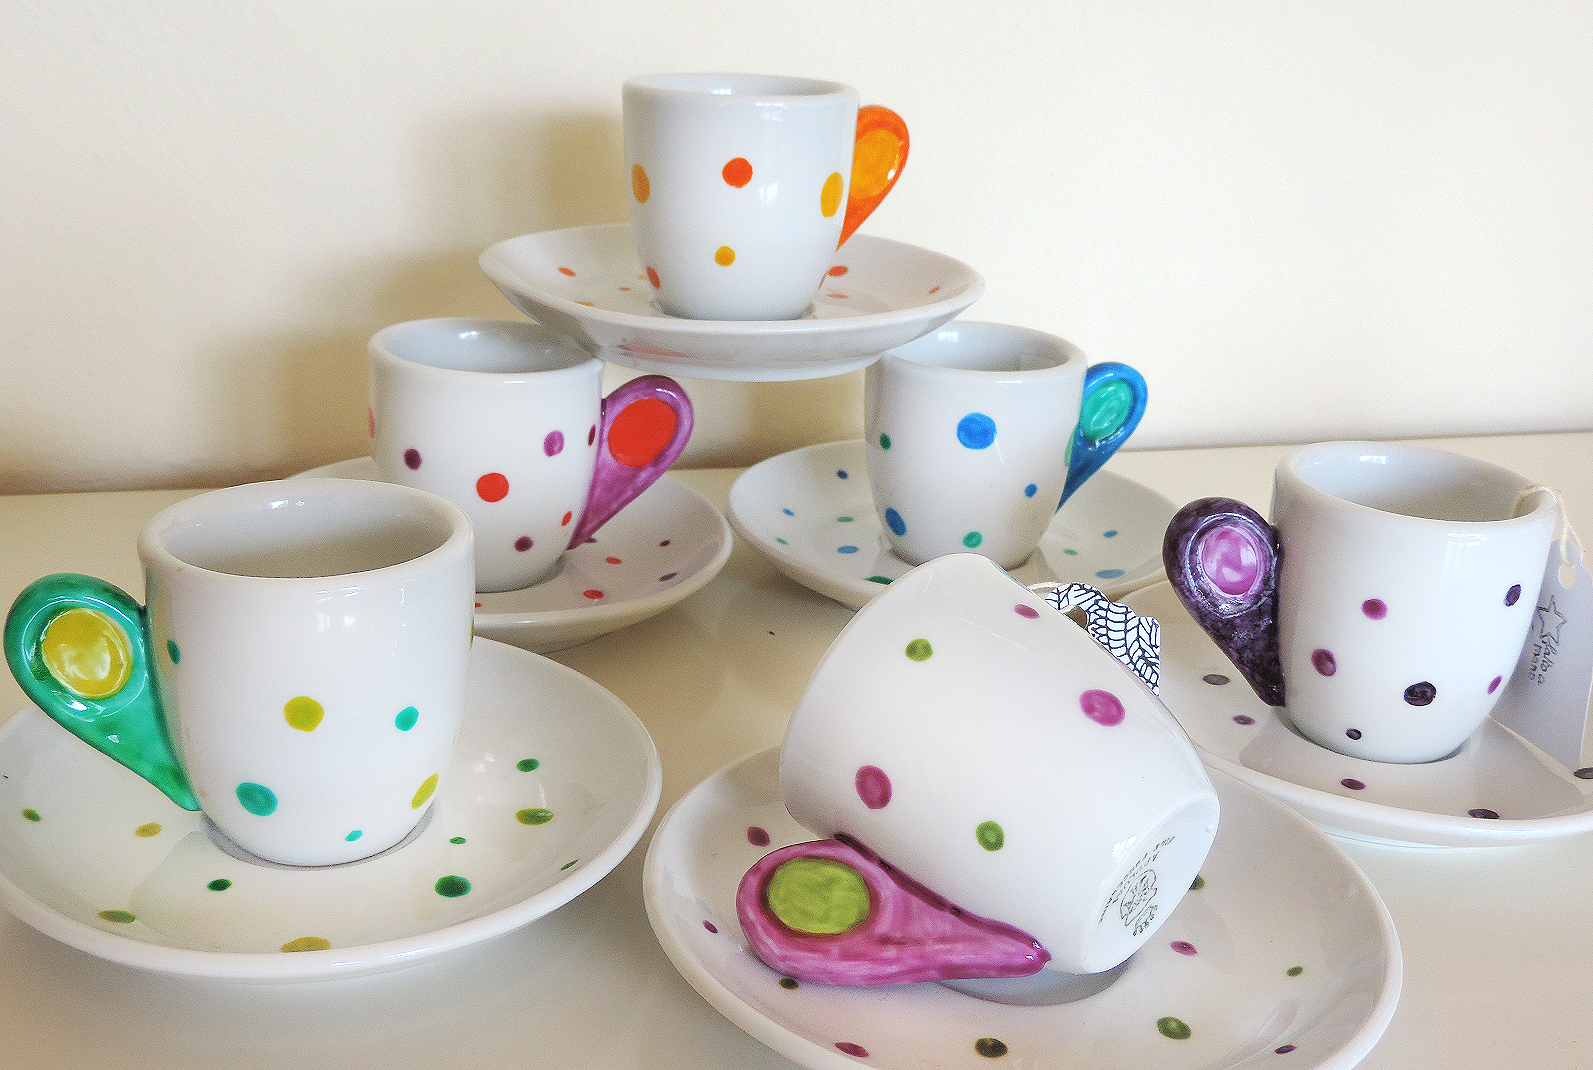 Servizio Tazzine da Caffè e Tè in Porcellana Dipinta con Piattini Ser 4 tazzine da Caffè con Motivi Floreali 